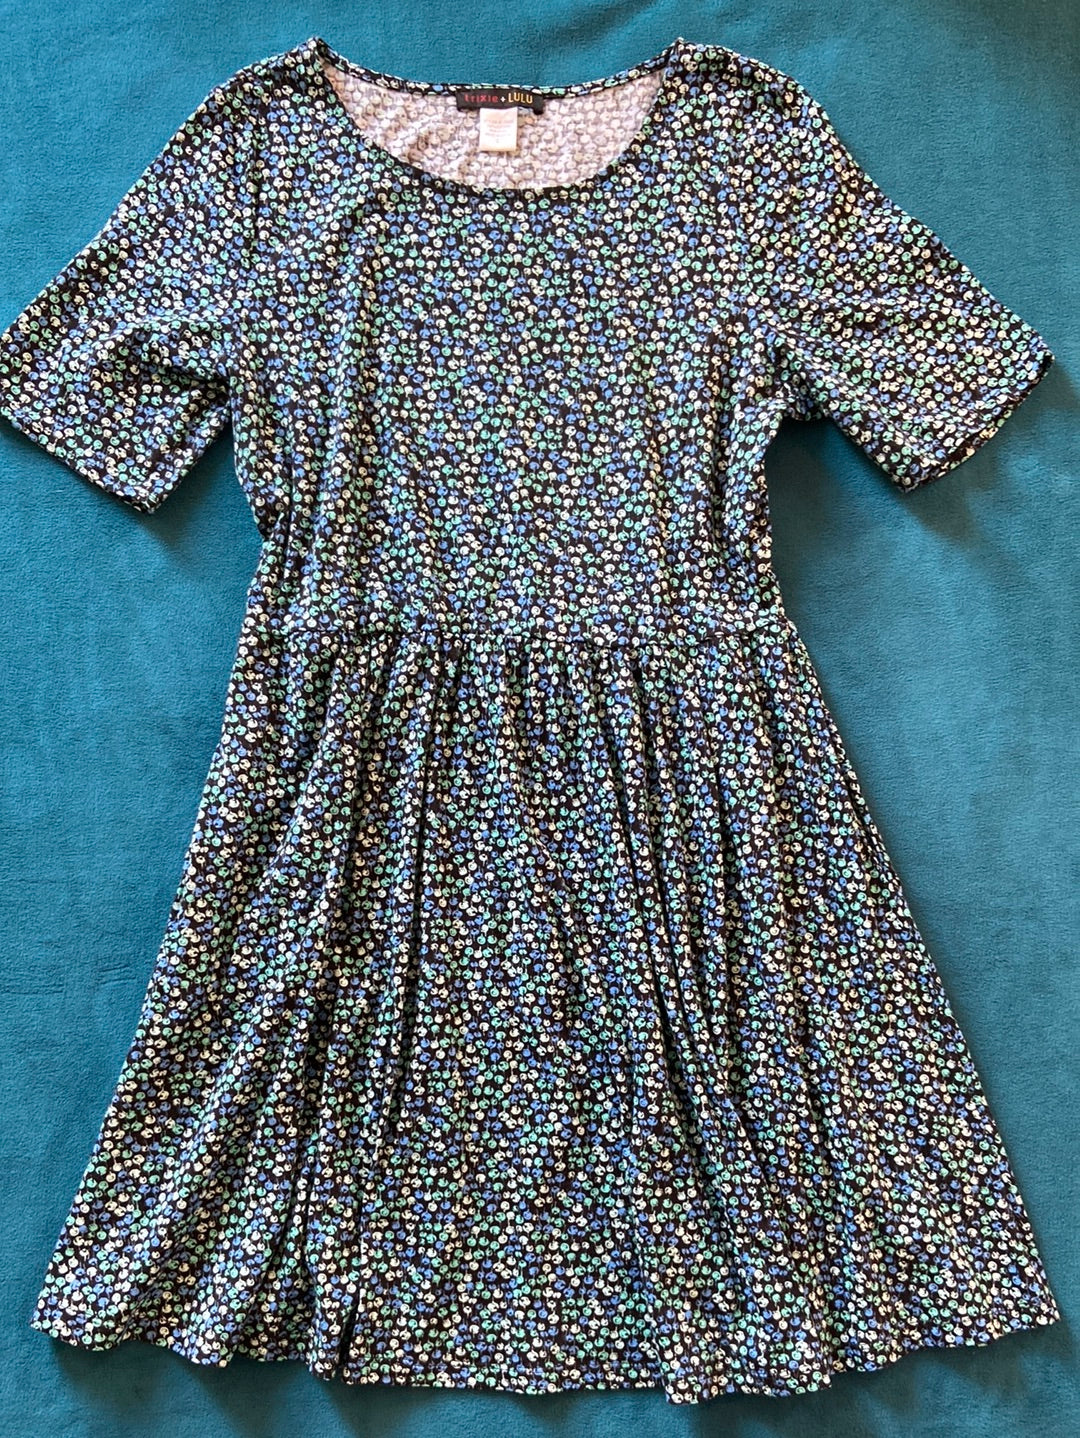 BLUE BASIC Trixie and Lulu Blue Print Dress Size L